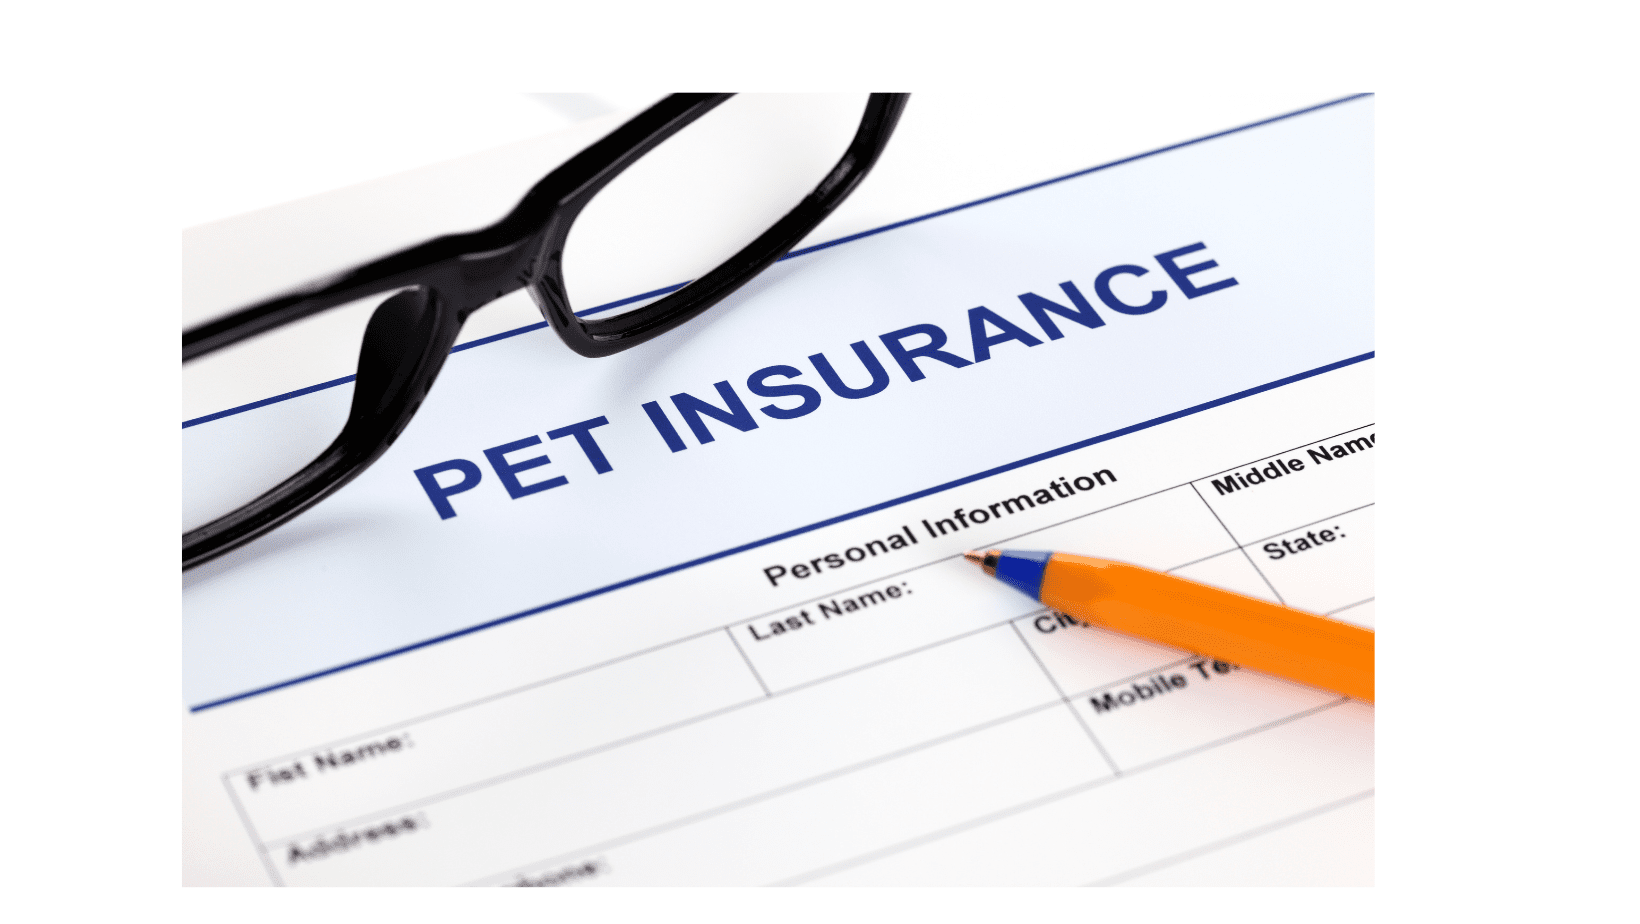 pet insurance